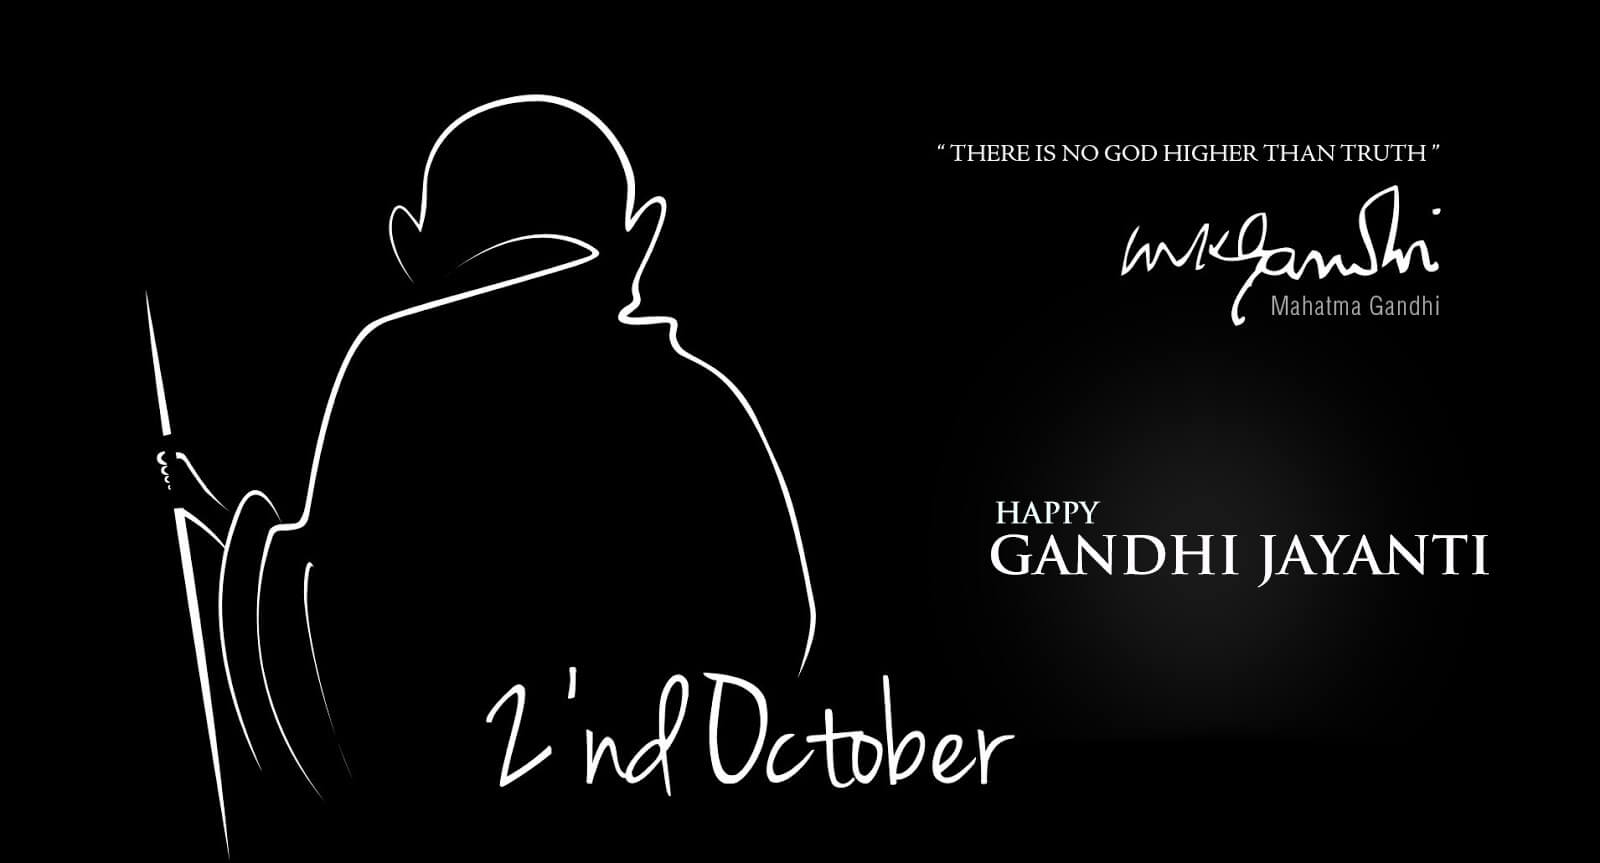 Gandhi jayanti quotes october 2 HD image wallpaper HD